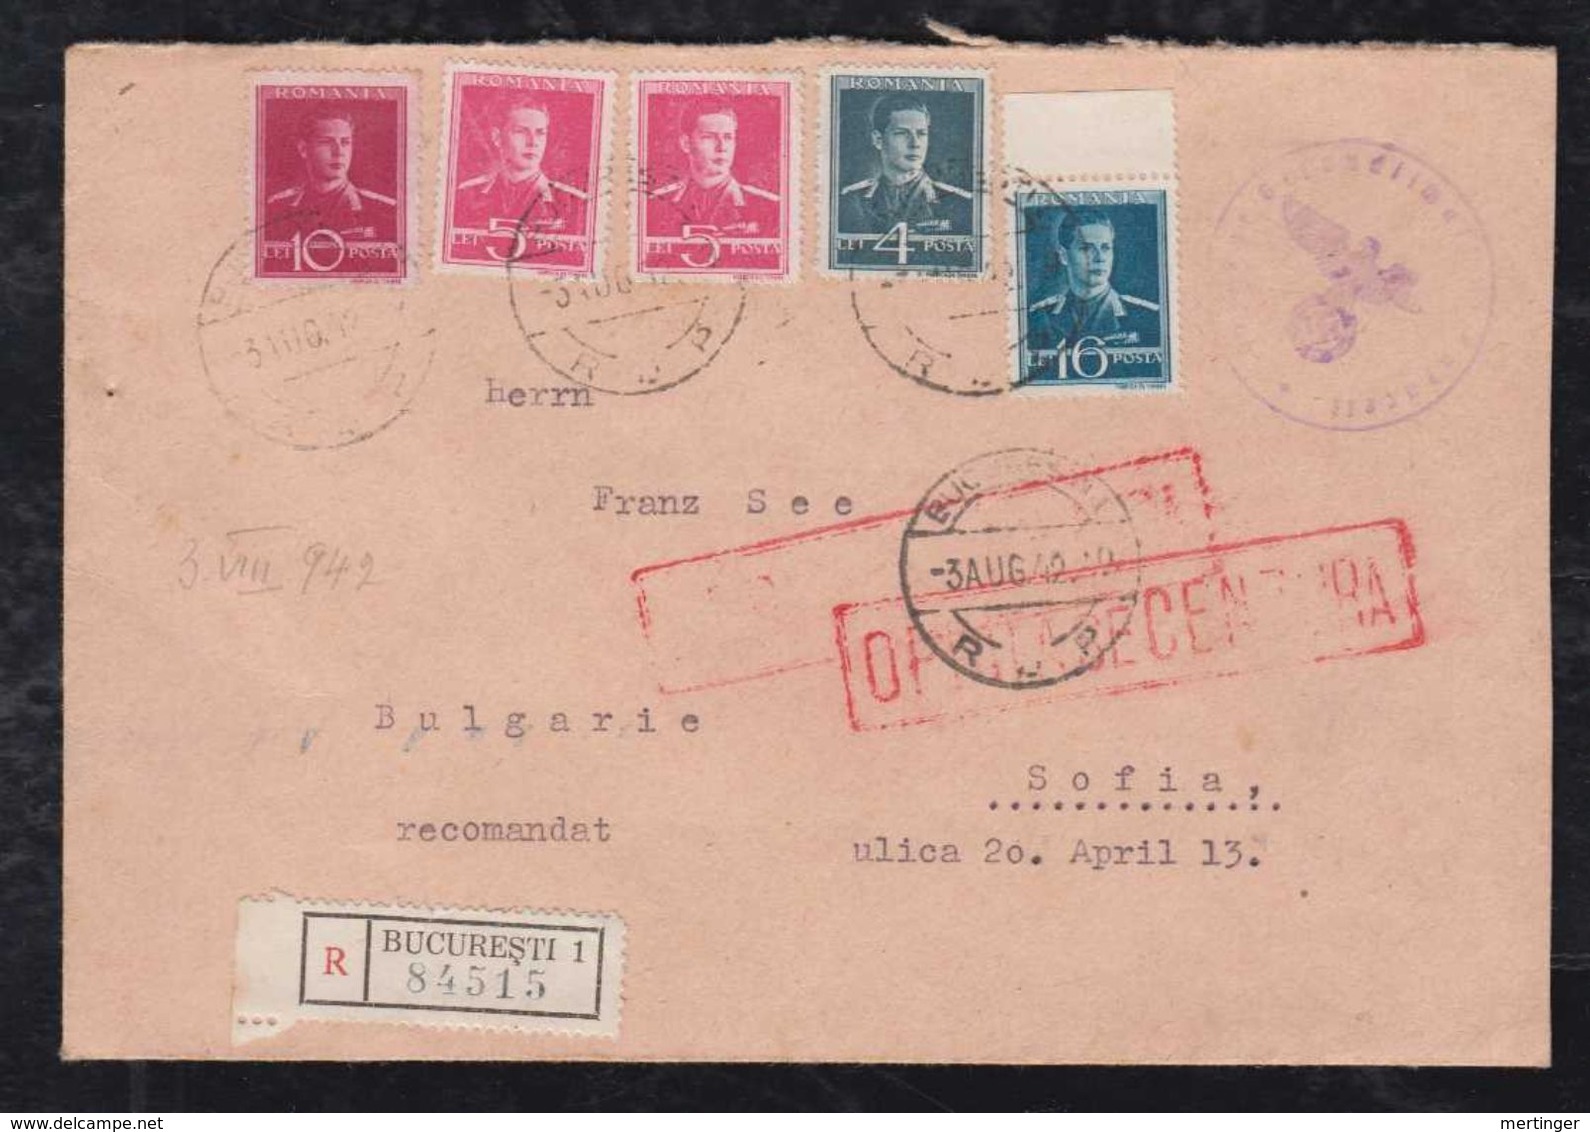 Rumänien Romania 1942 Registered Censor Cover To SOFIA Bulgaria German Embassy - Briefe U. Dokumente